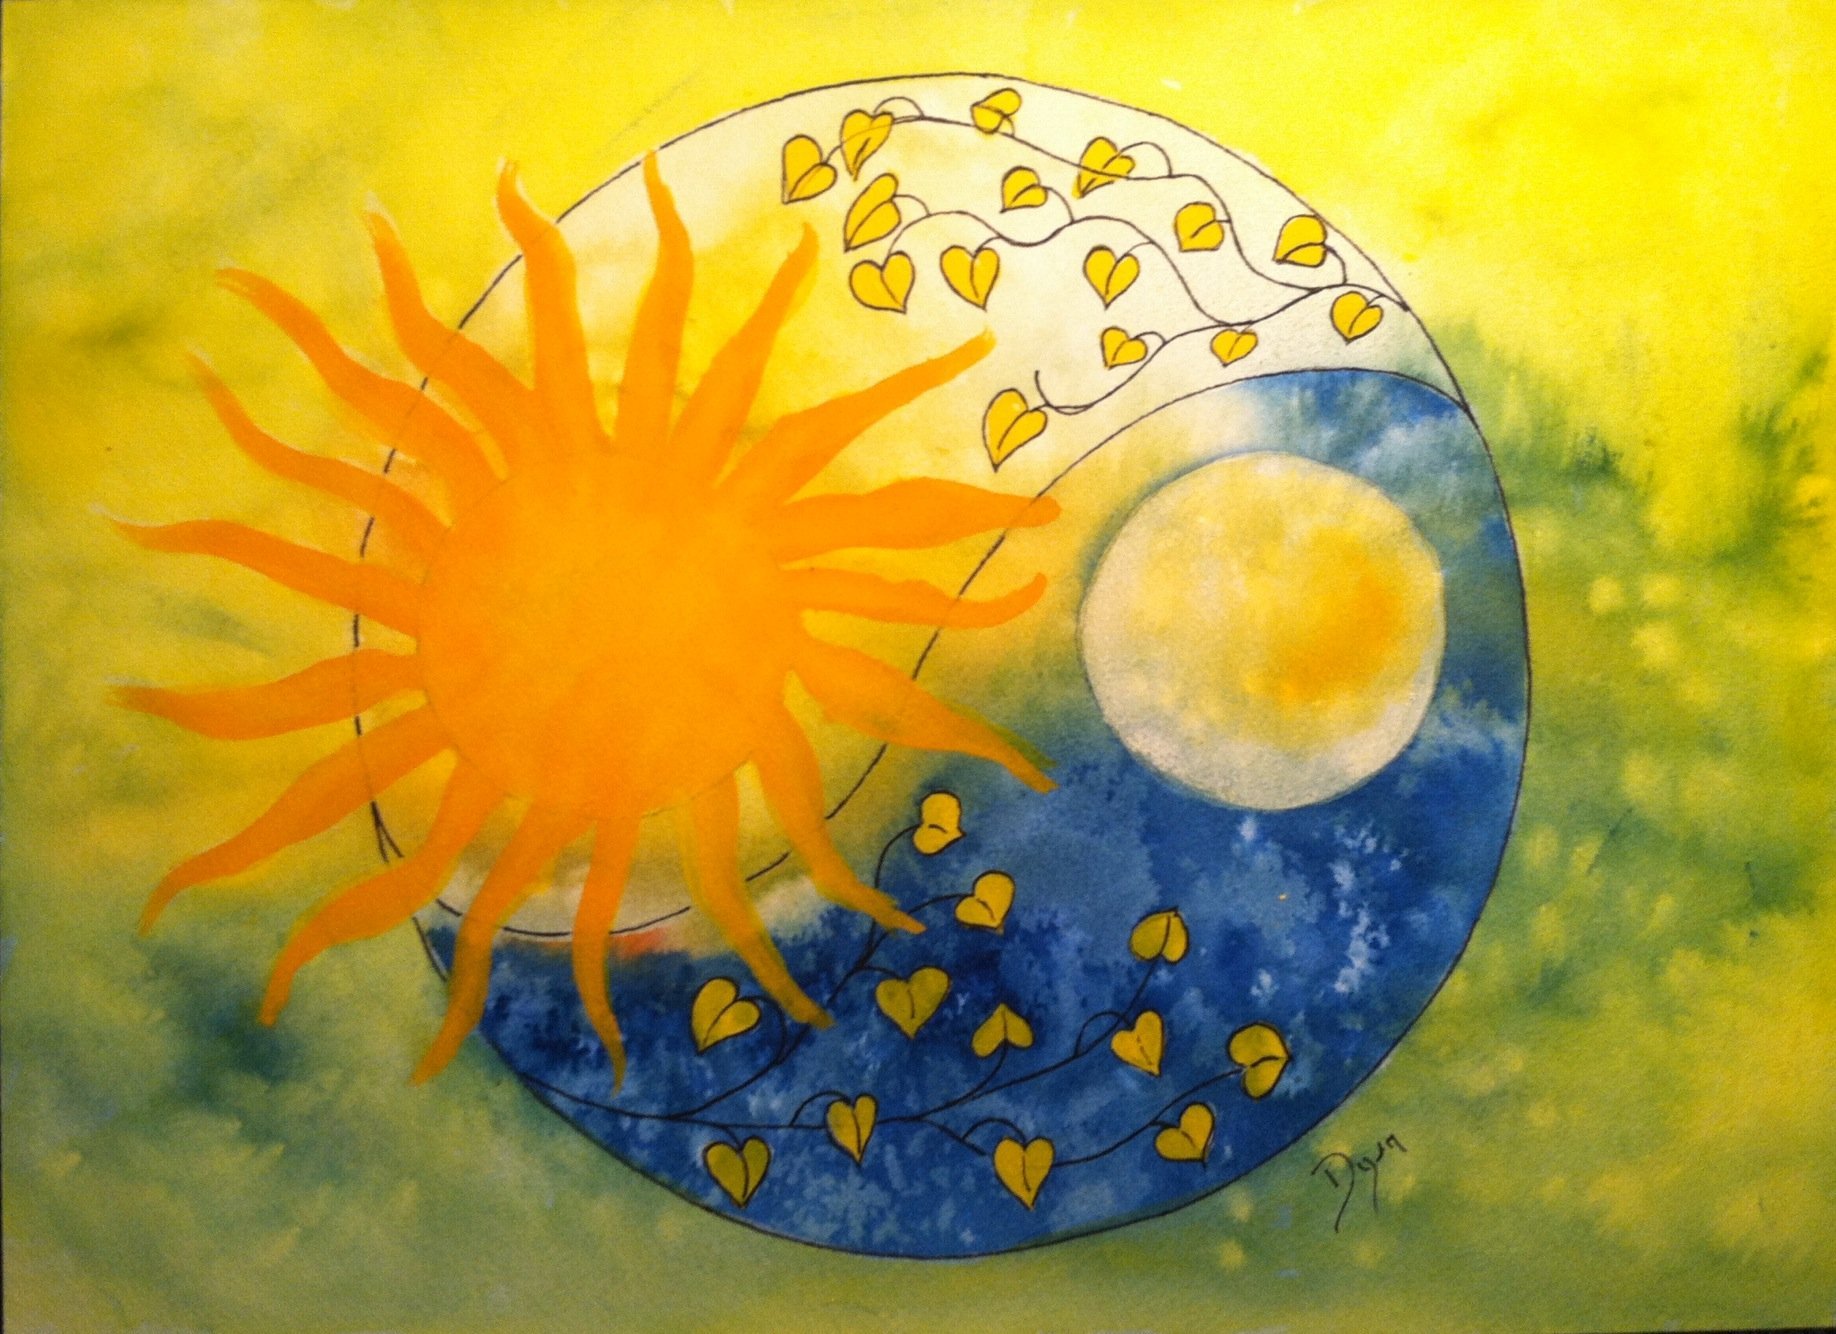 21 день солнца. Солнце и Луна. Солнышко рисунок. Солнце рисунок. Солнце нарисованное.